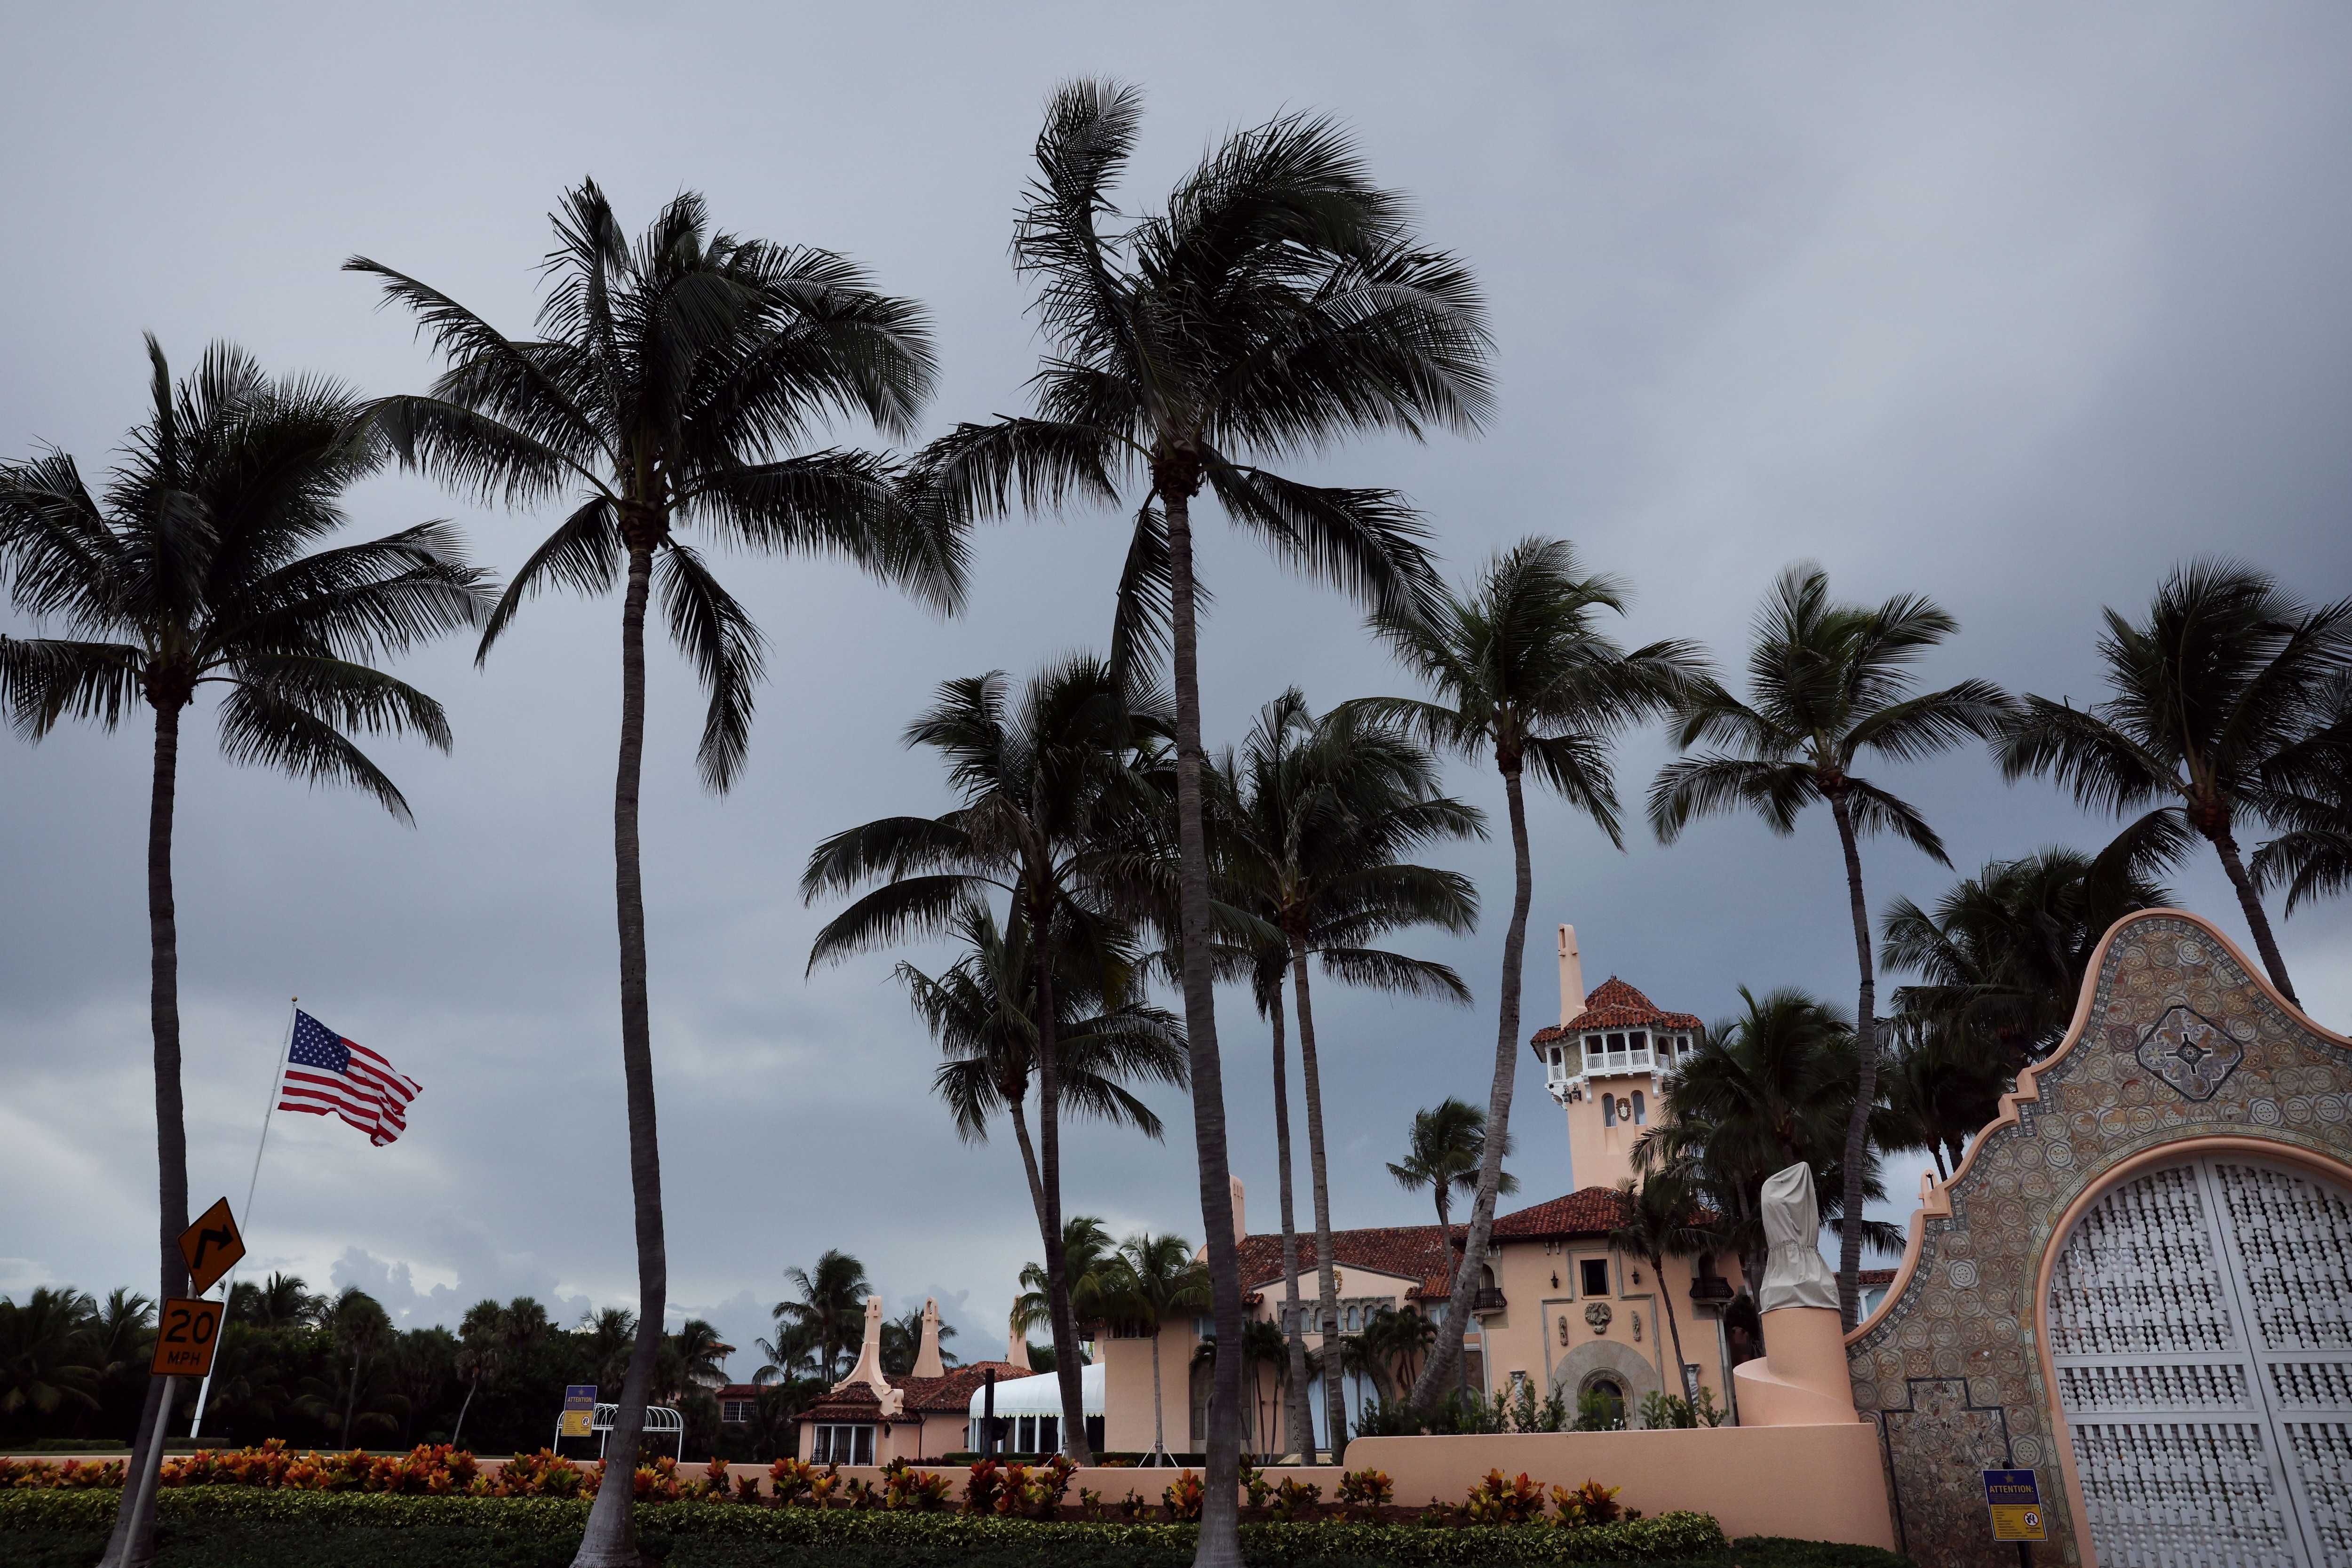 Former president Donald Trump’s Mar-a-Lago Club in Palm Beach, Fla.